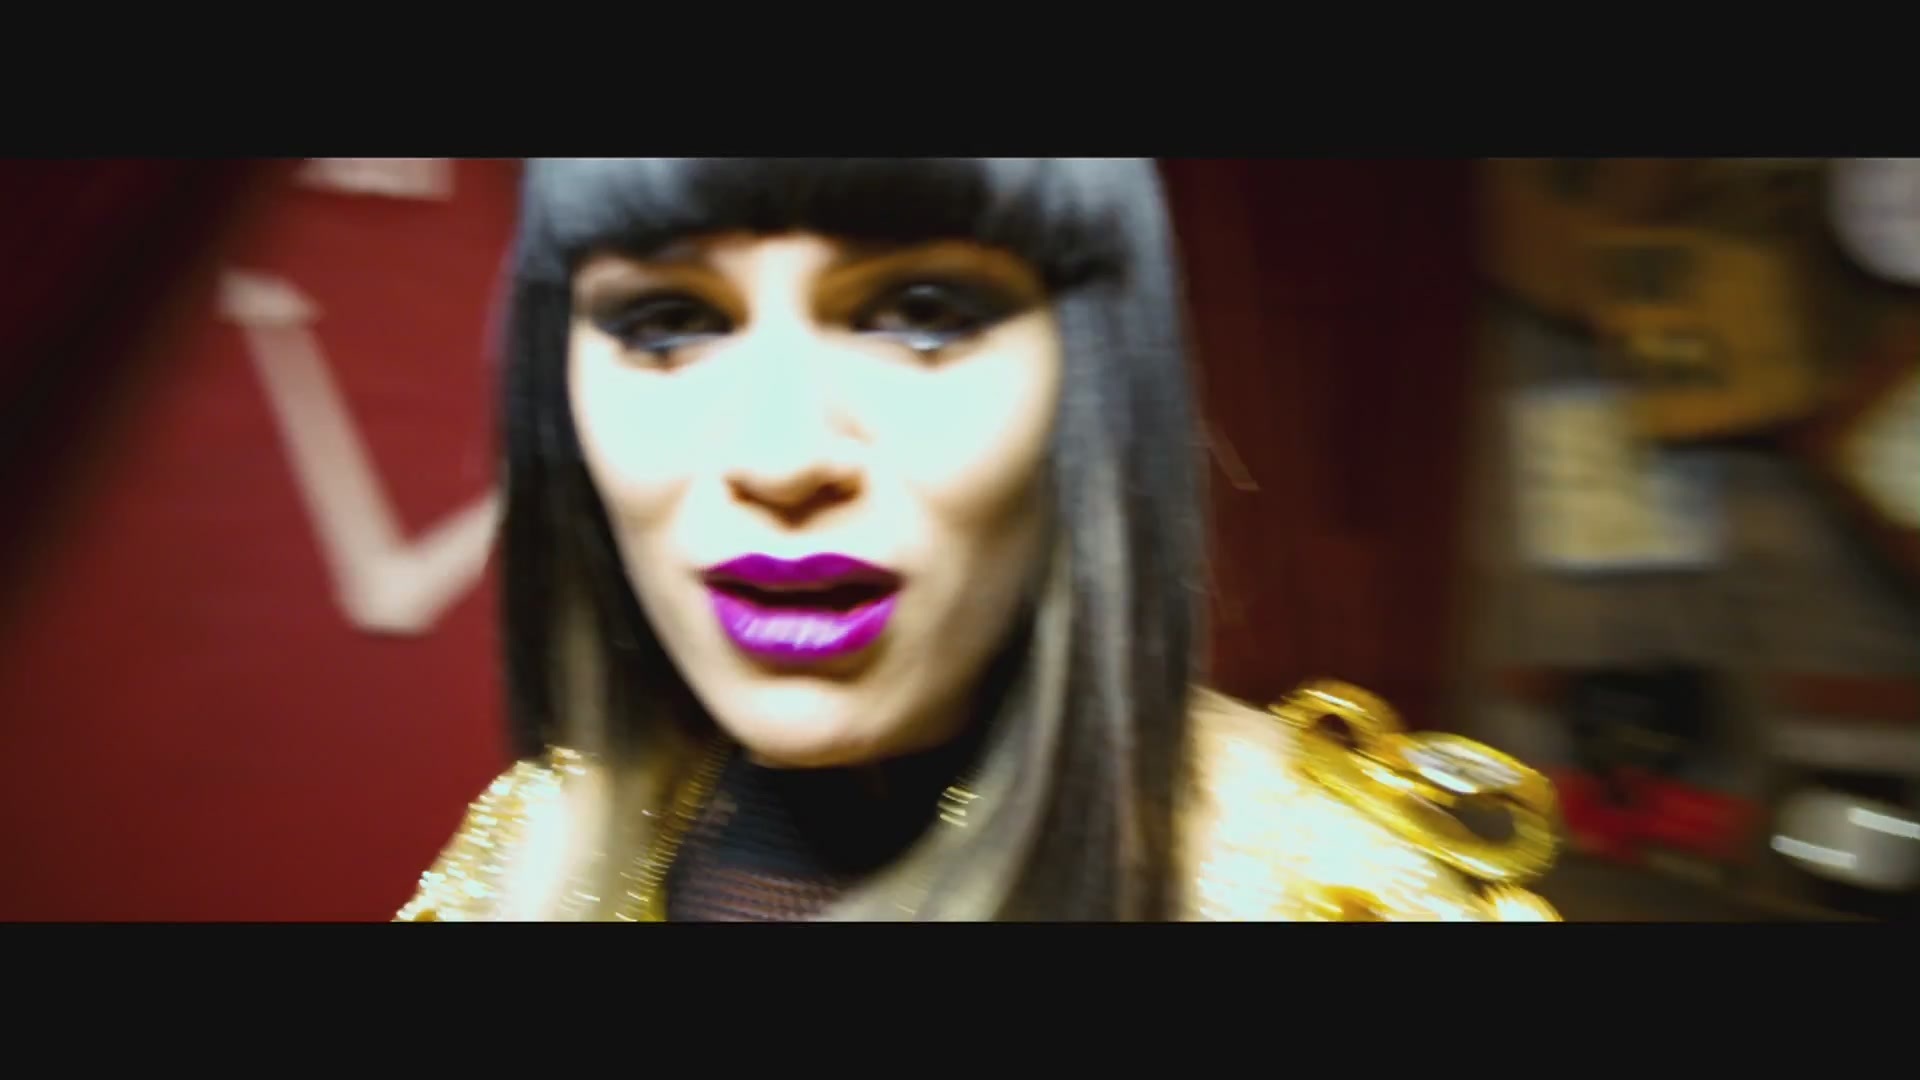 Nobody's Perfect [Music Video] - Jessie J Image (21700147) - Fanpop